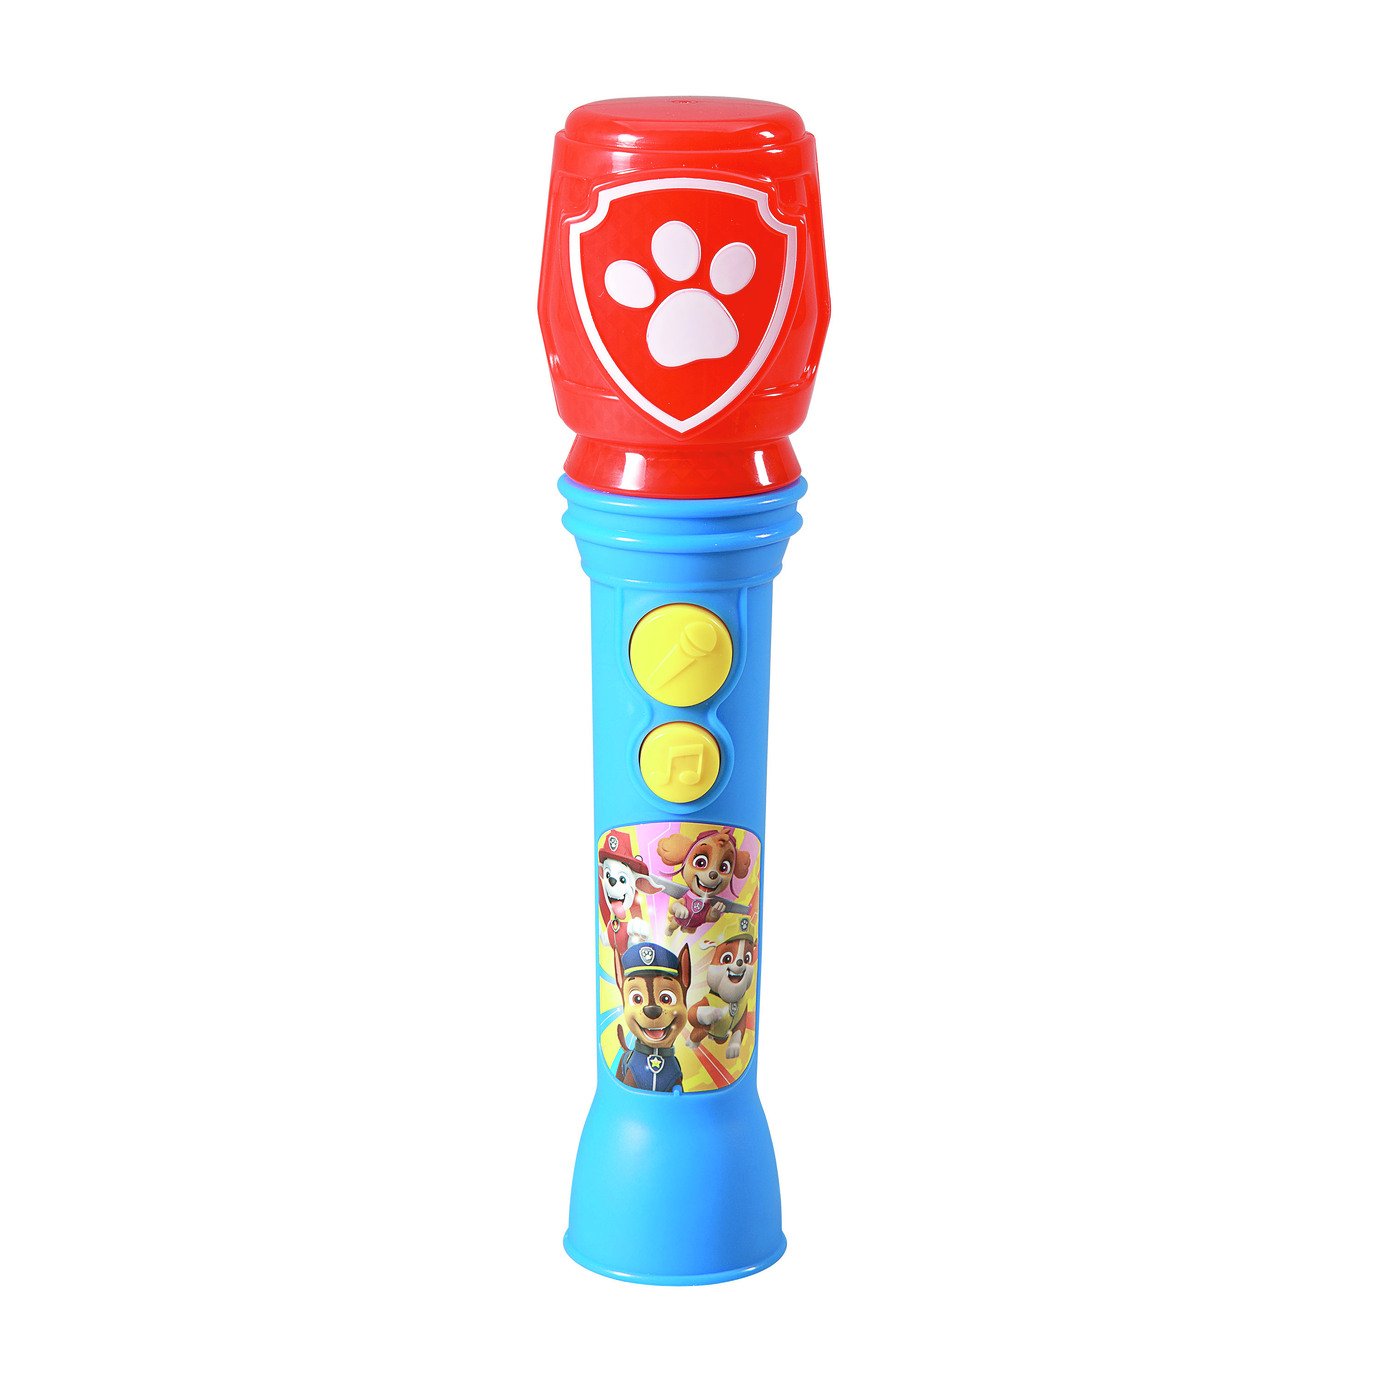 PAW Patrol Microphone Toy